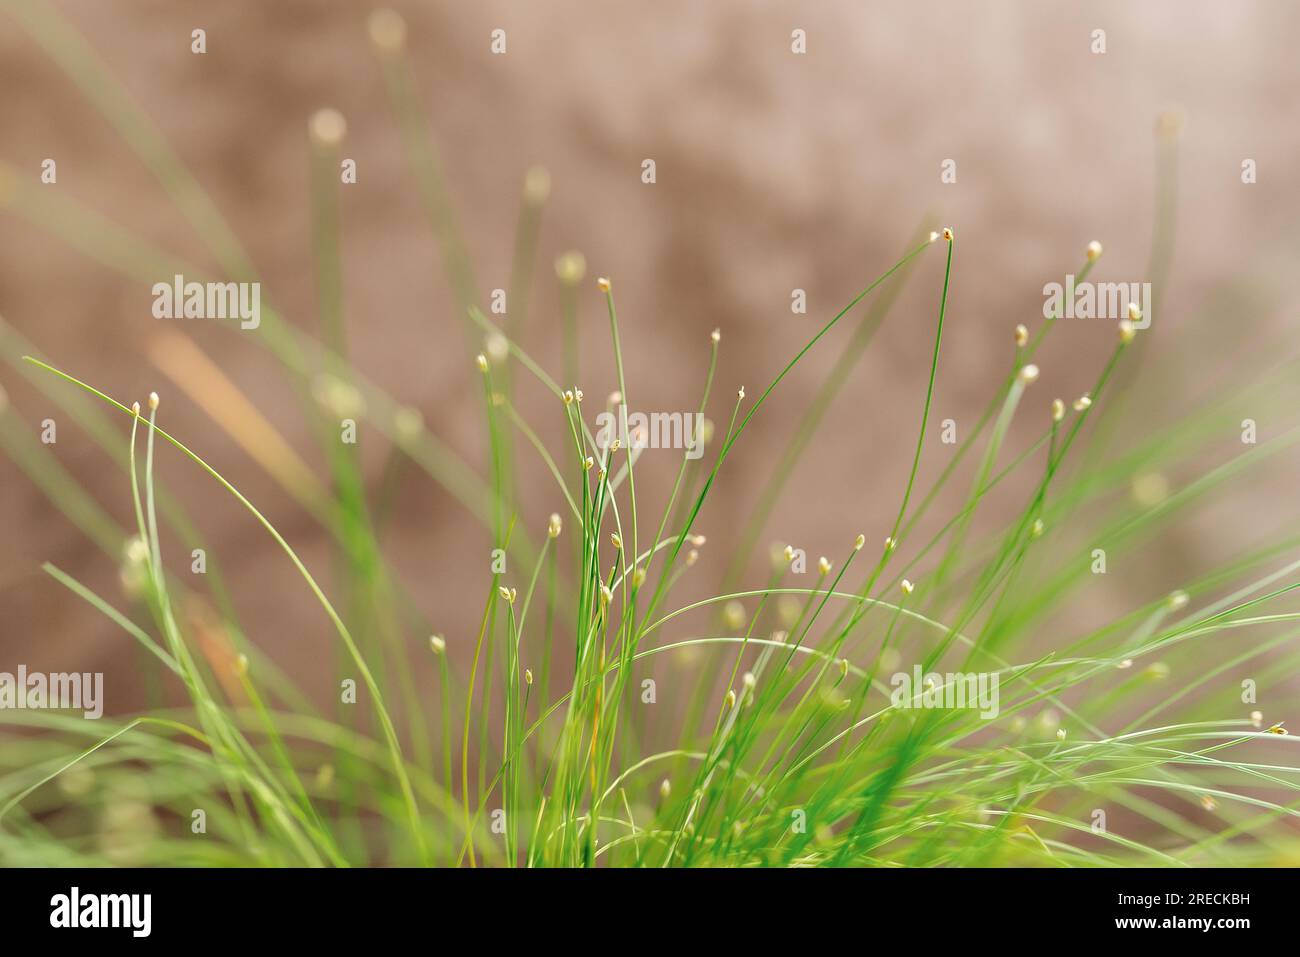 Isolepis cernua, Scirpus cernuus. Bright fresh green grass under morning sun. Copy space for your design. Stock Photo